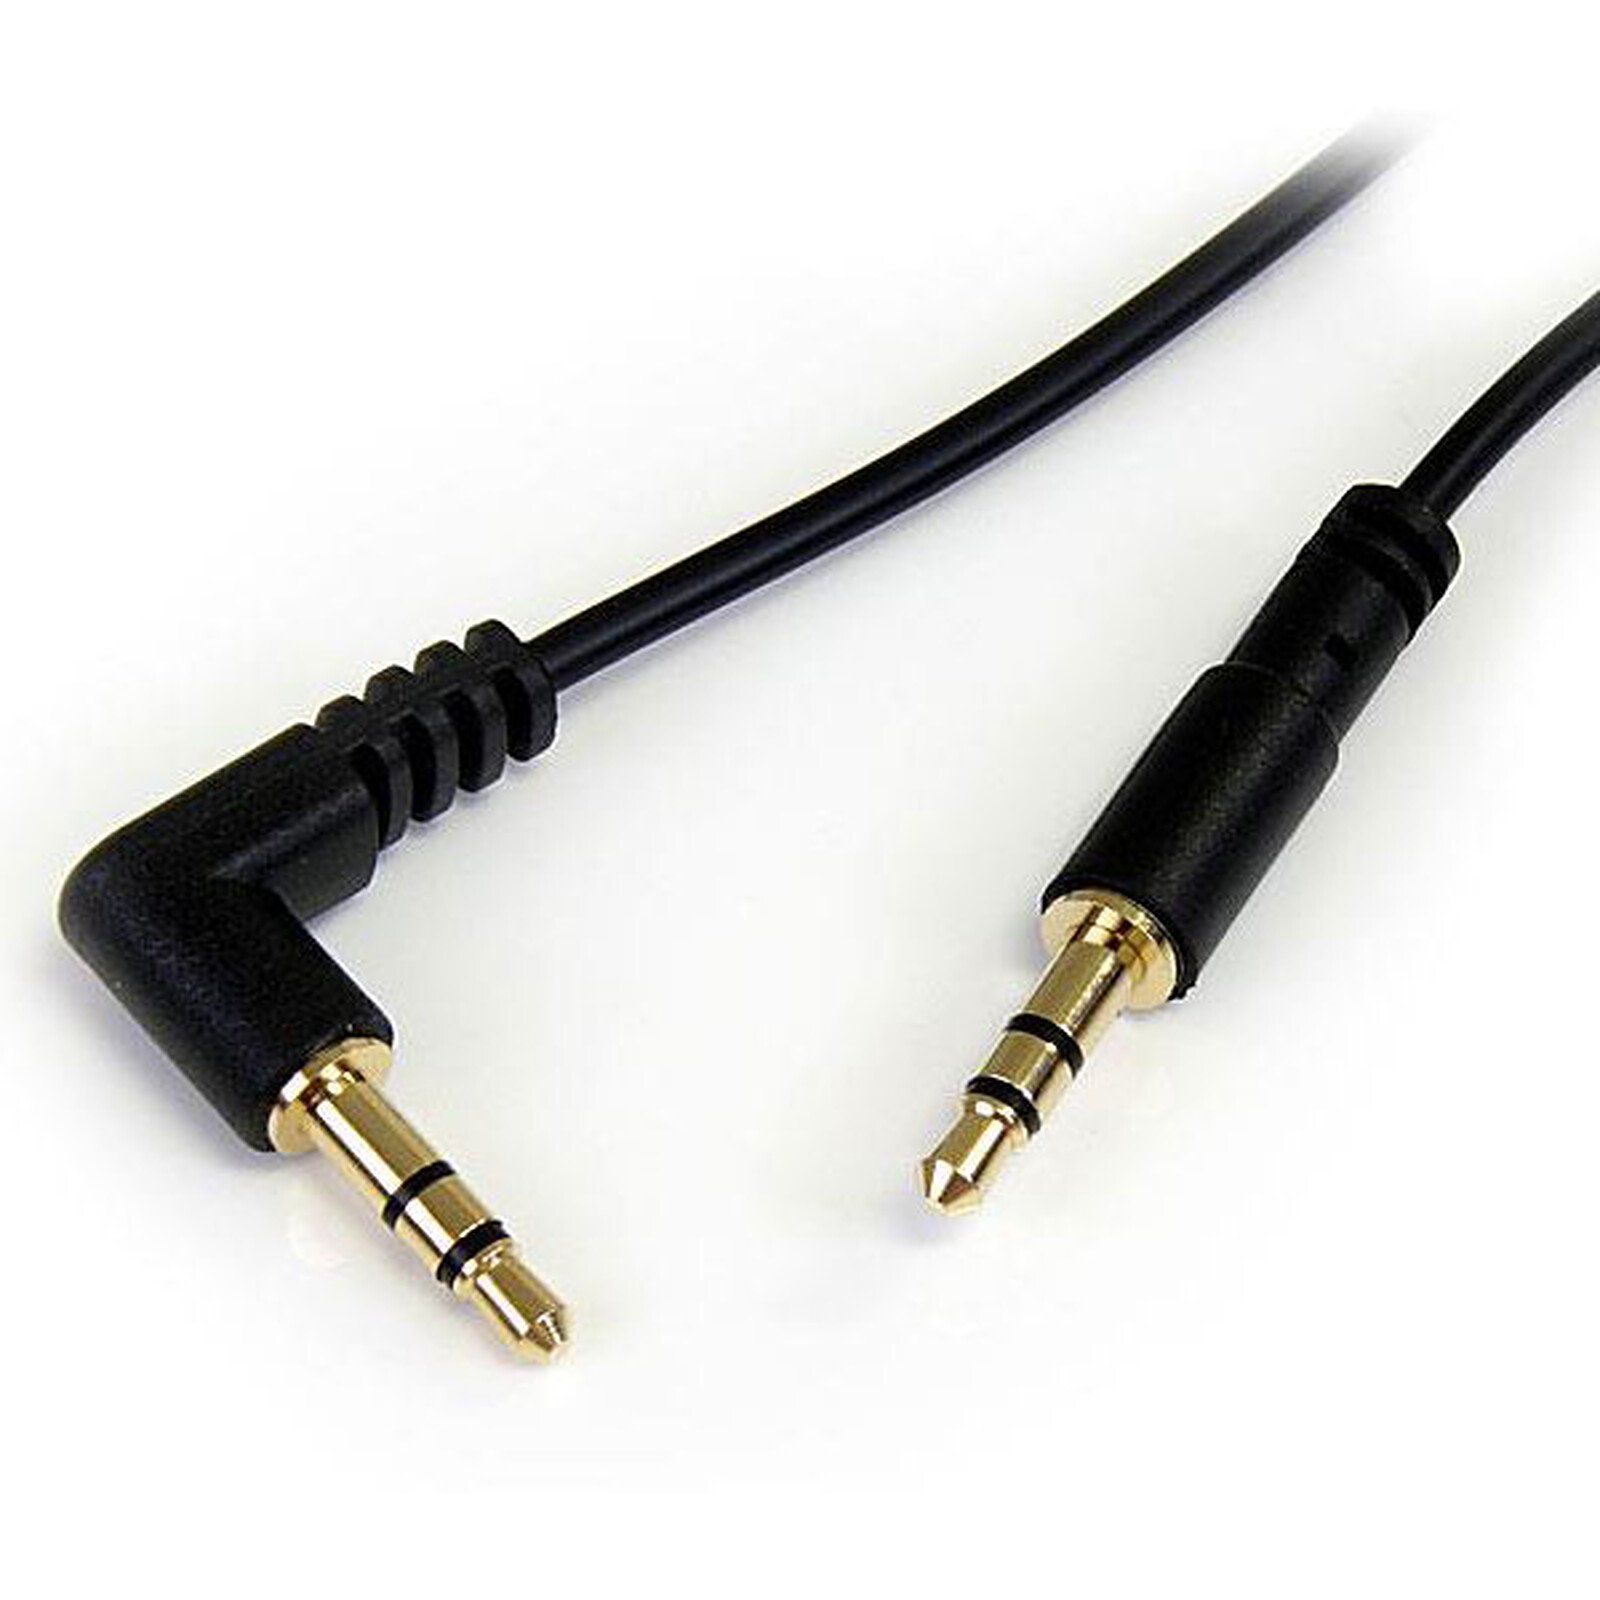 Cable alargador de jack de 3,5 mm Nedis (1 m) + Control de volumen - Cable  de audio Jack - LDLC